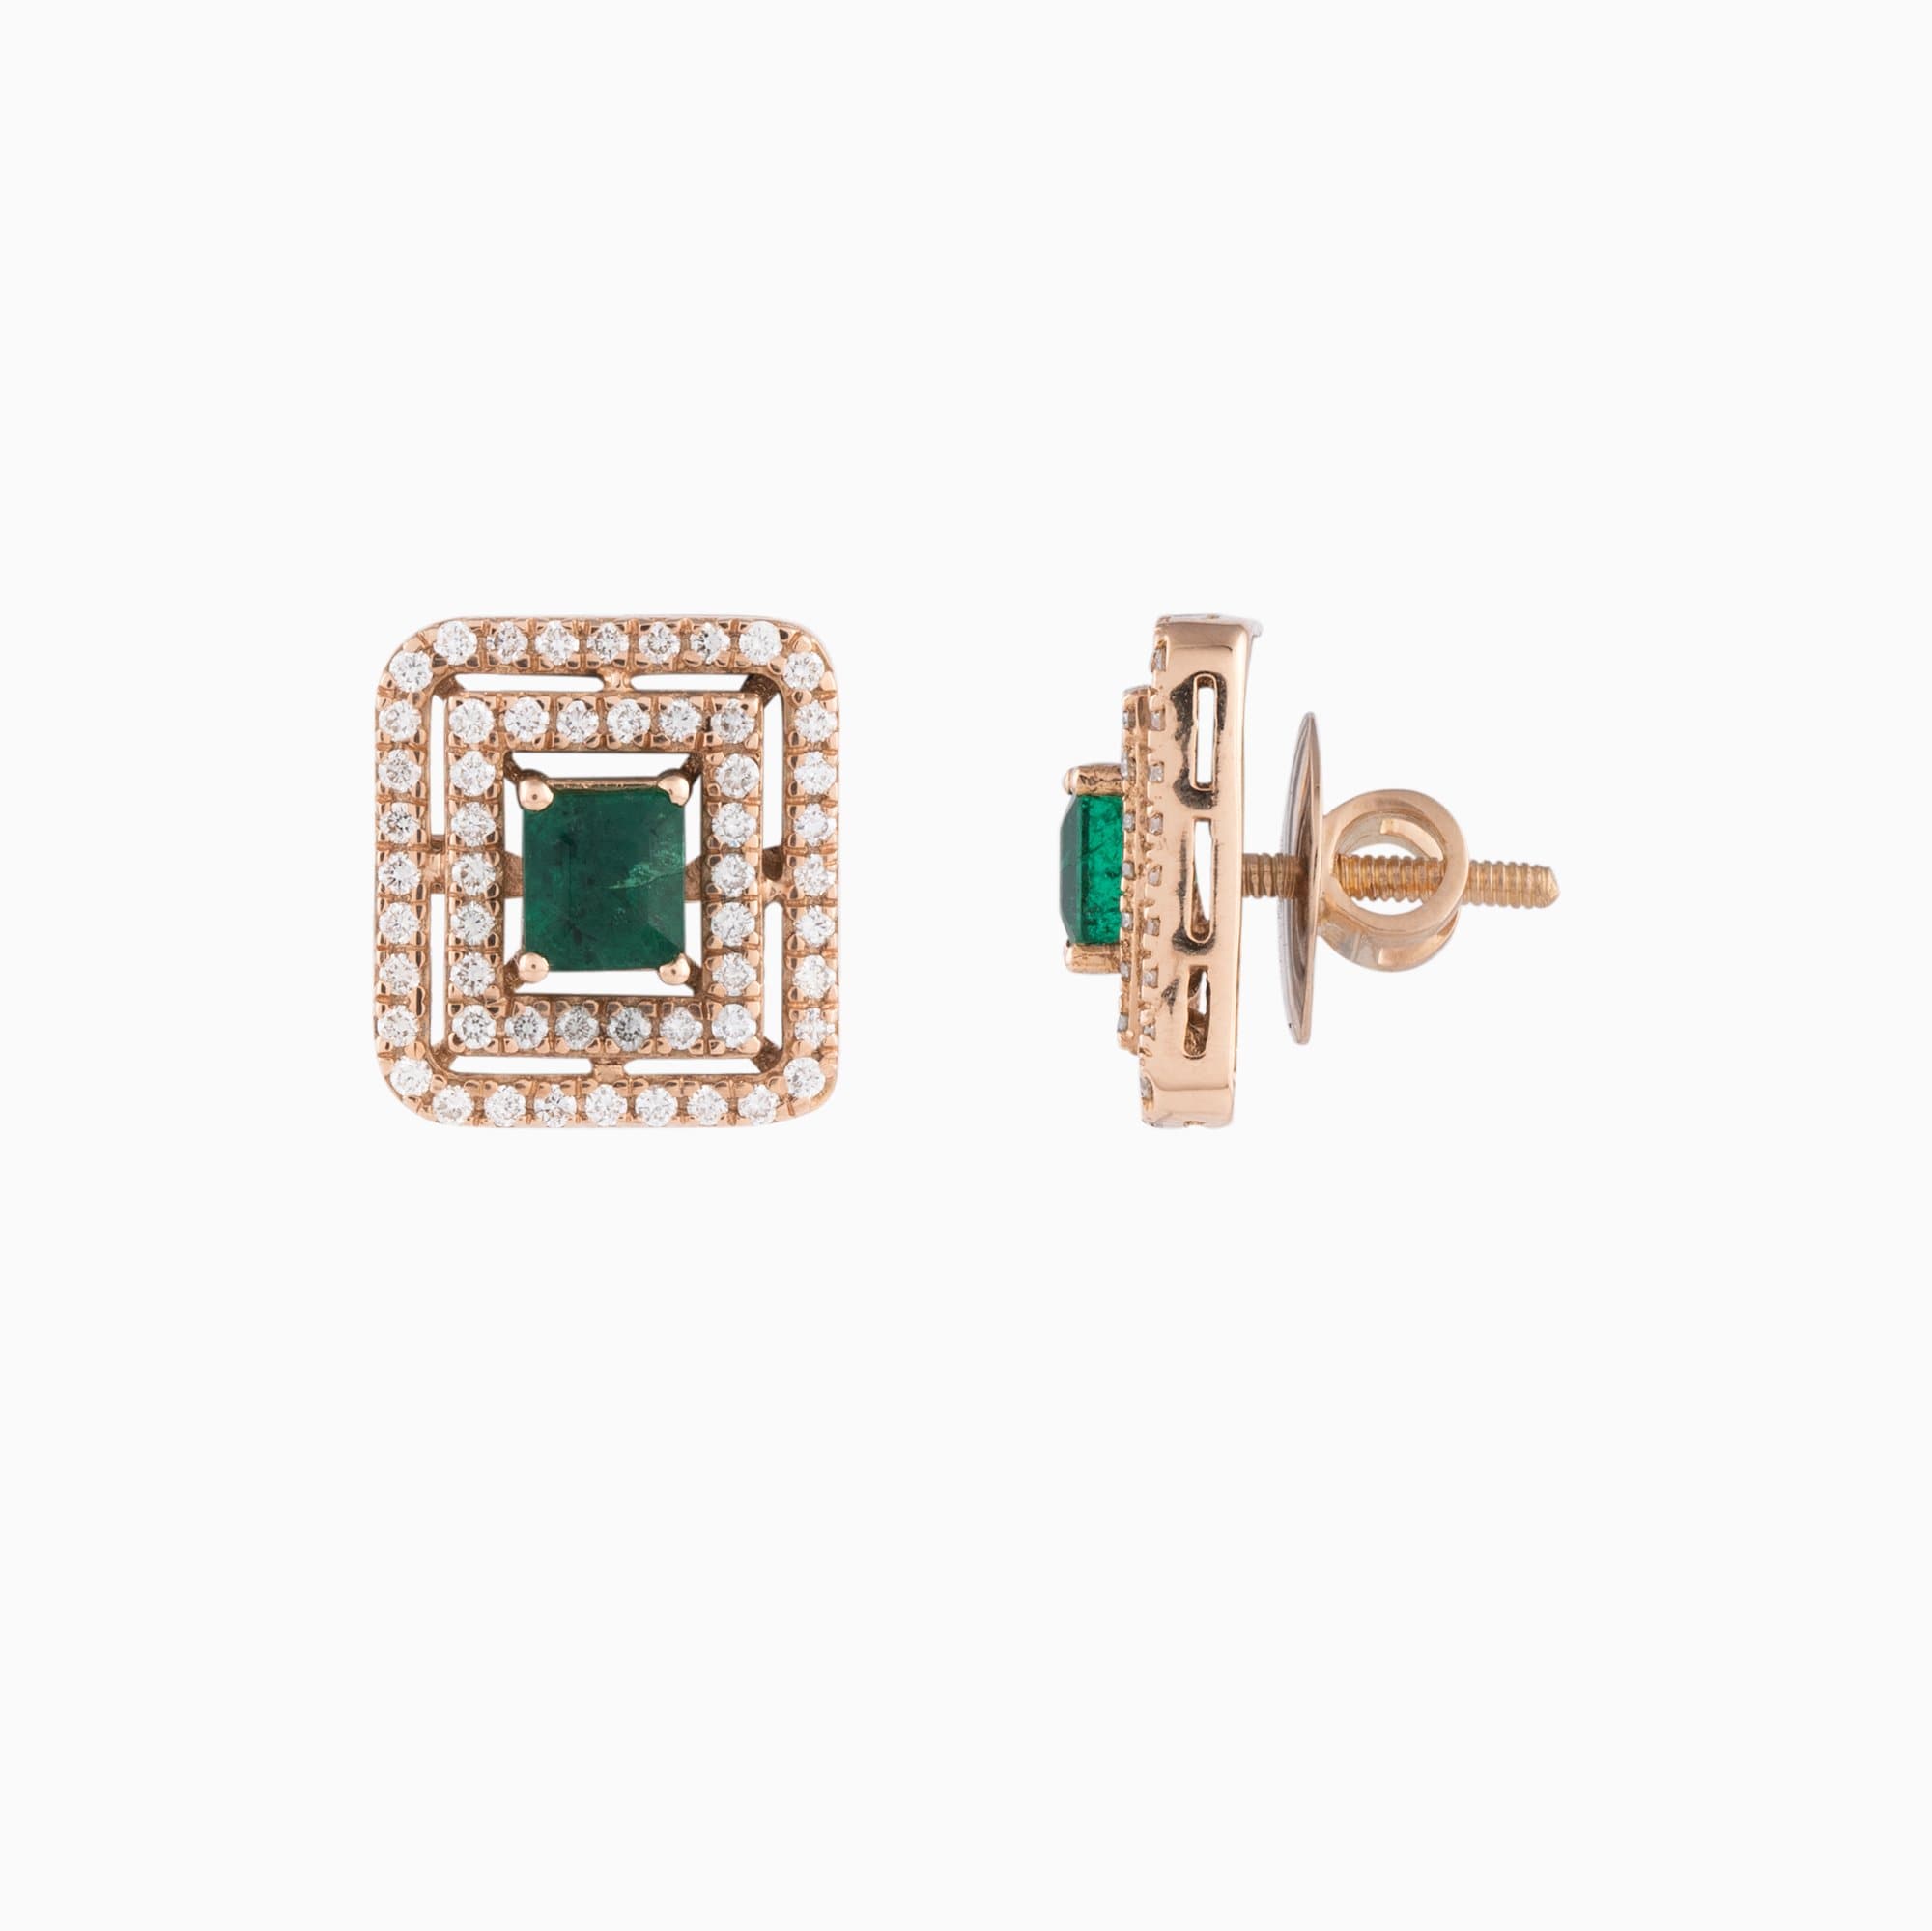 Earring Pair with Octagon Cut Emerald, Round Cut Diamond- PGDE0247